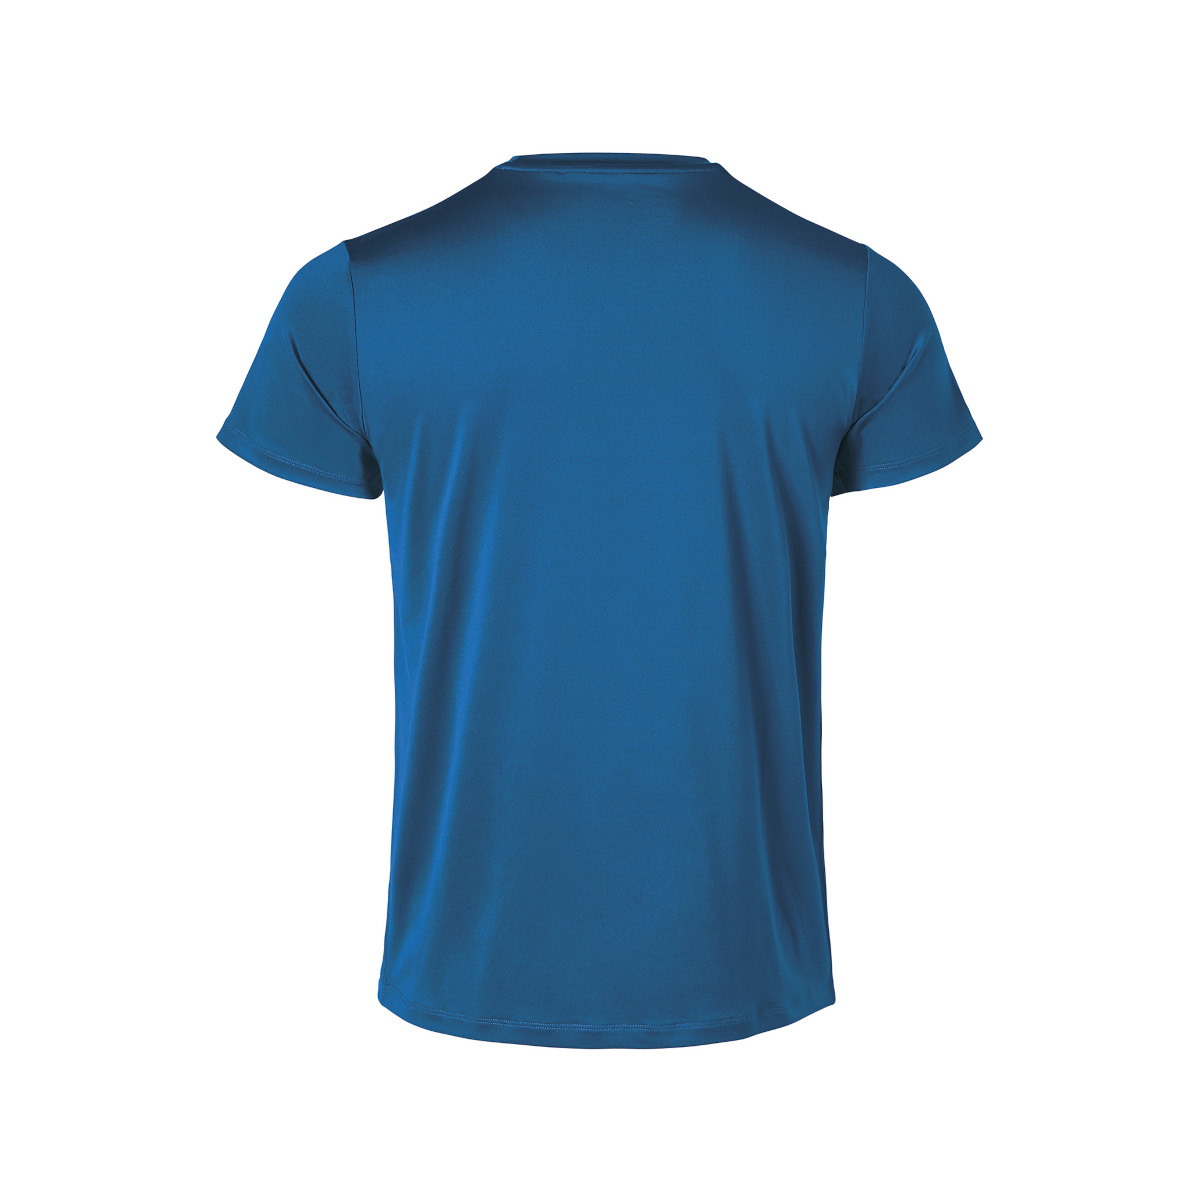 Marinepool OCEAN t-shirt, homme - bleu, taille XXXL